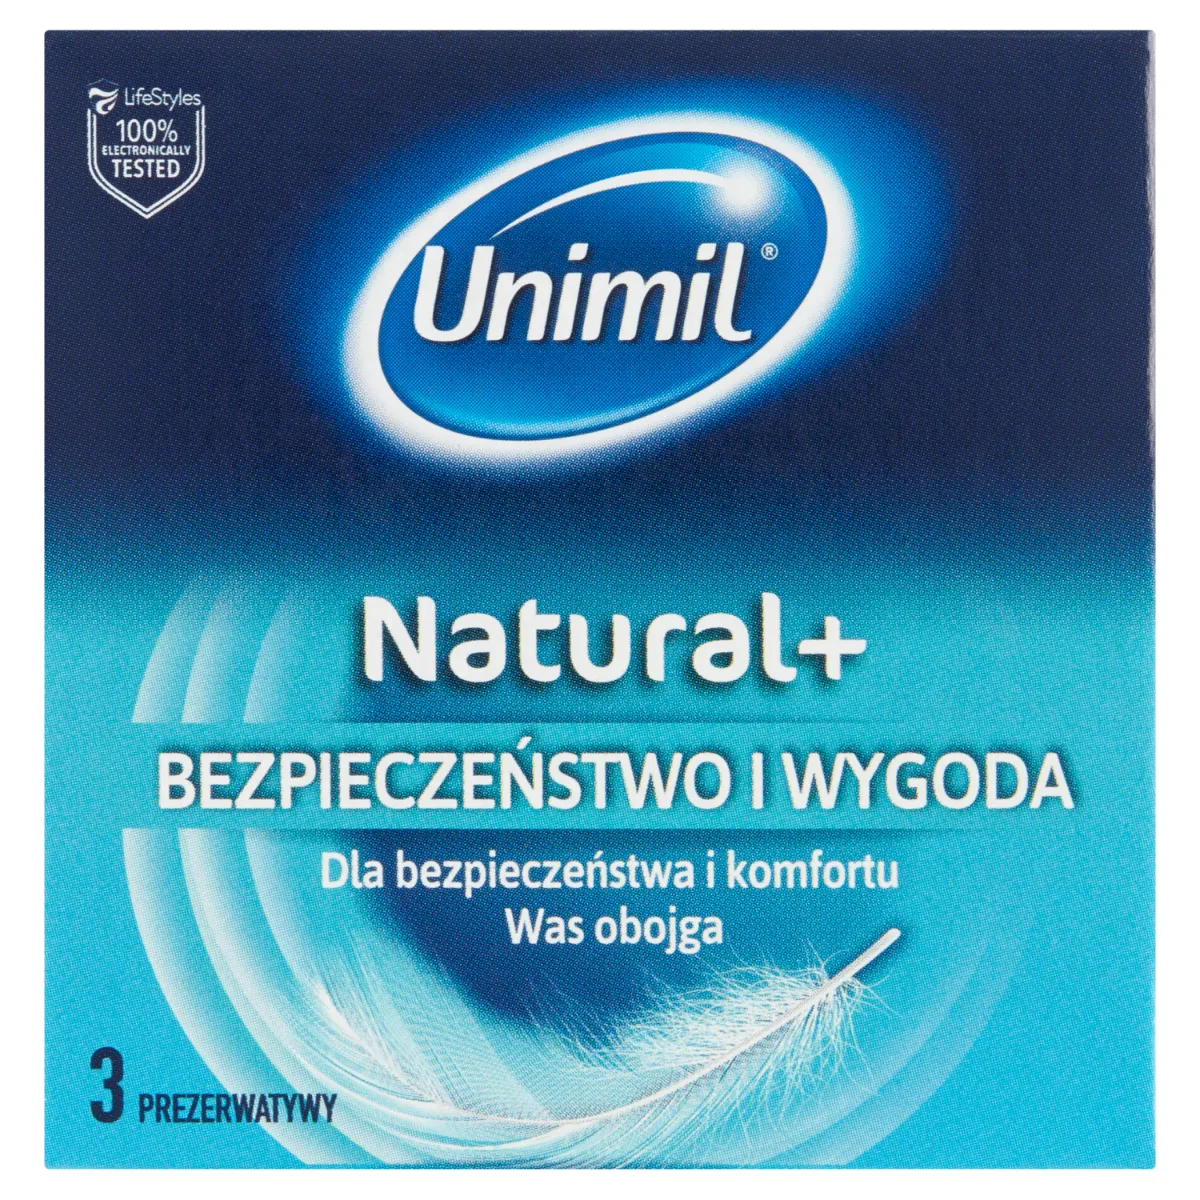 Unimil Natural+ lateksowe prezerwatywy, 3 szt.